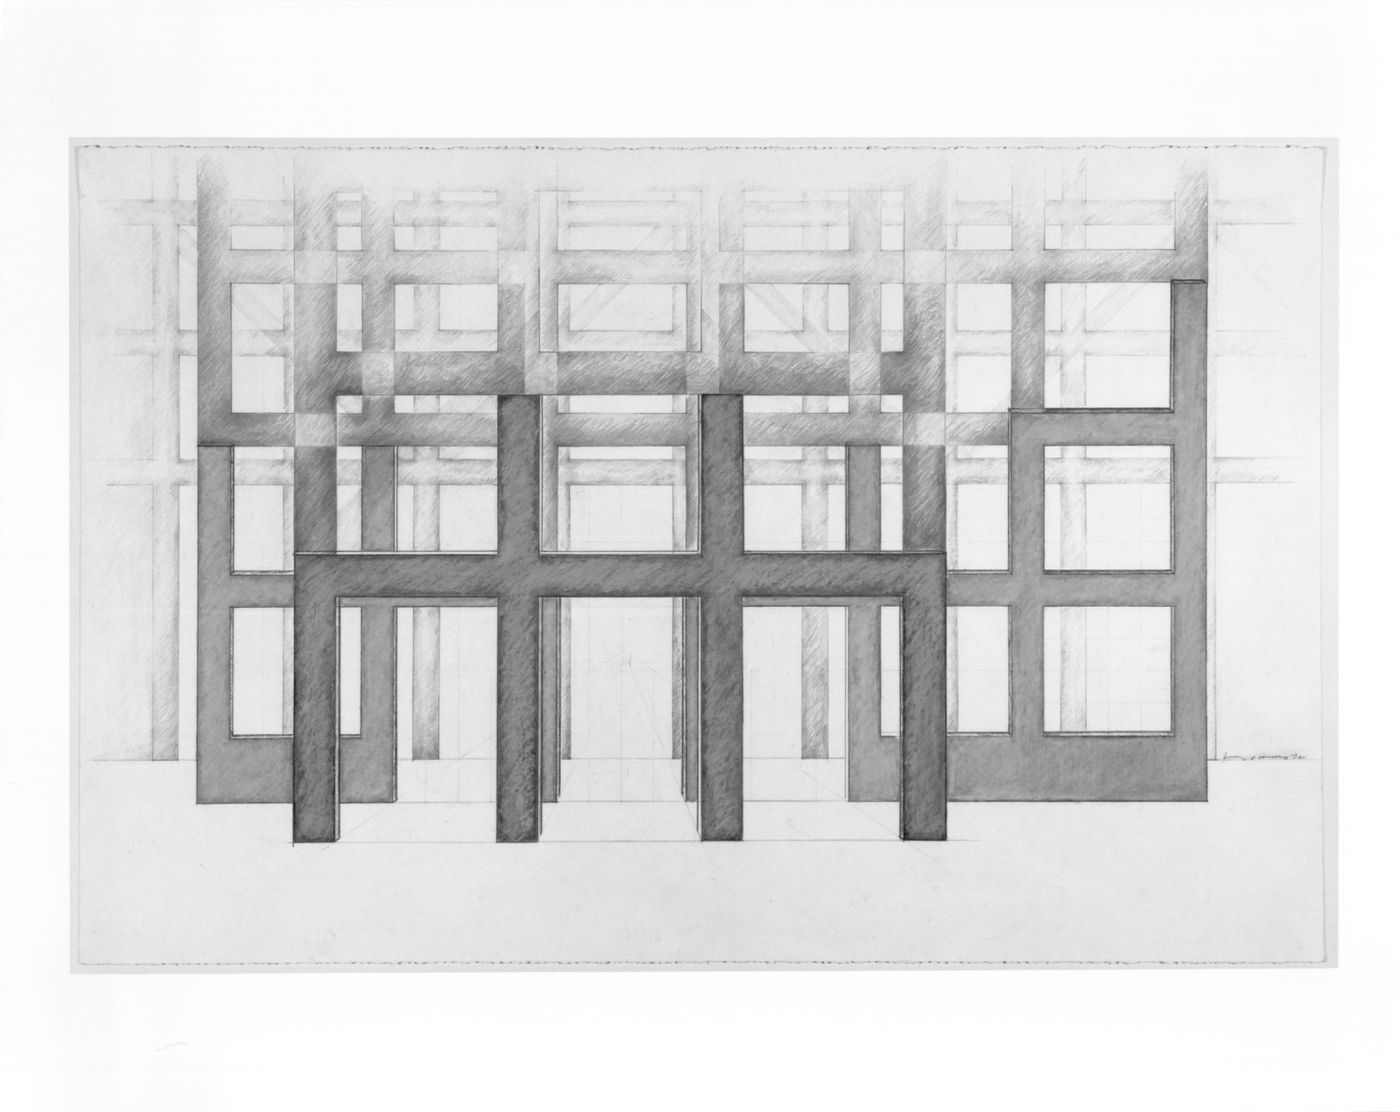 A Chicago construction: framing the frame